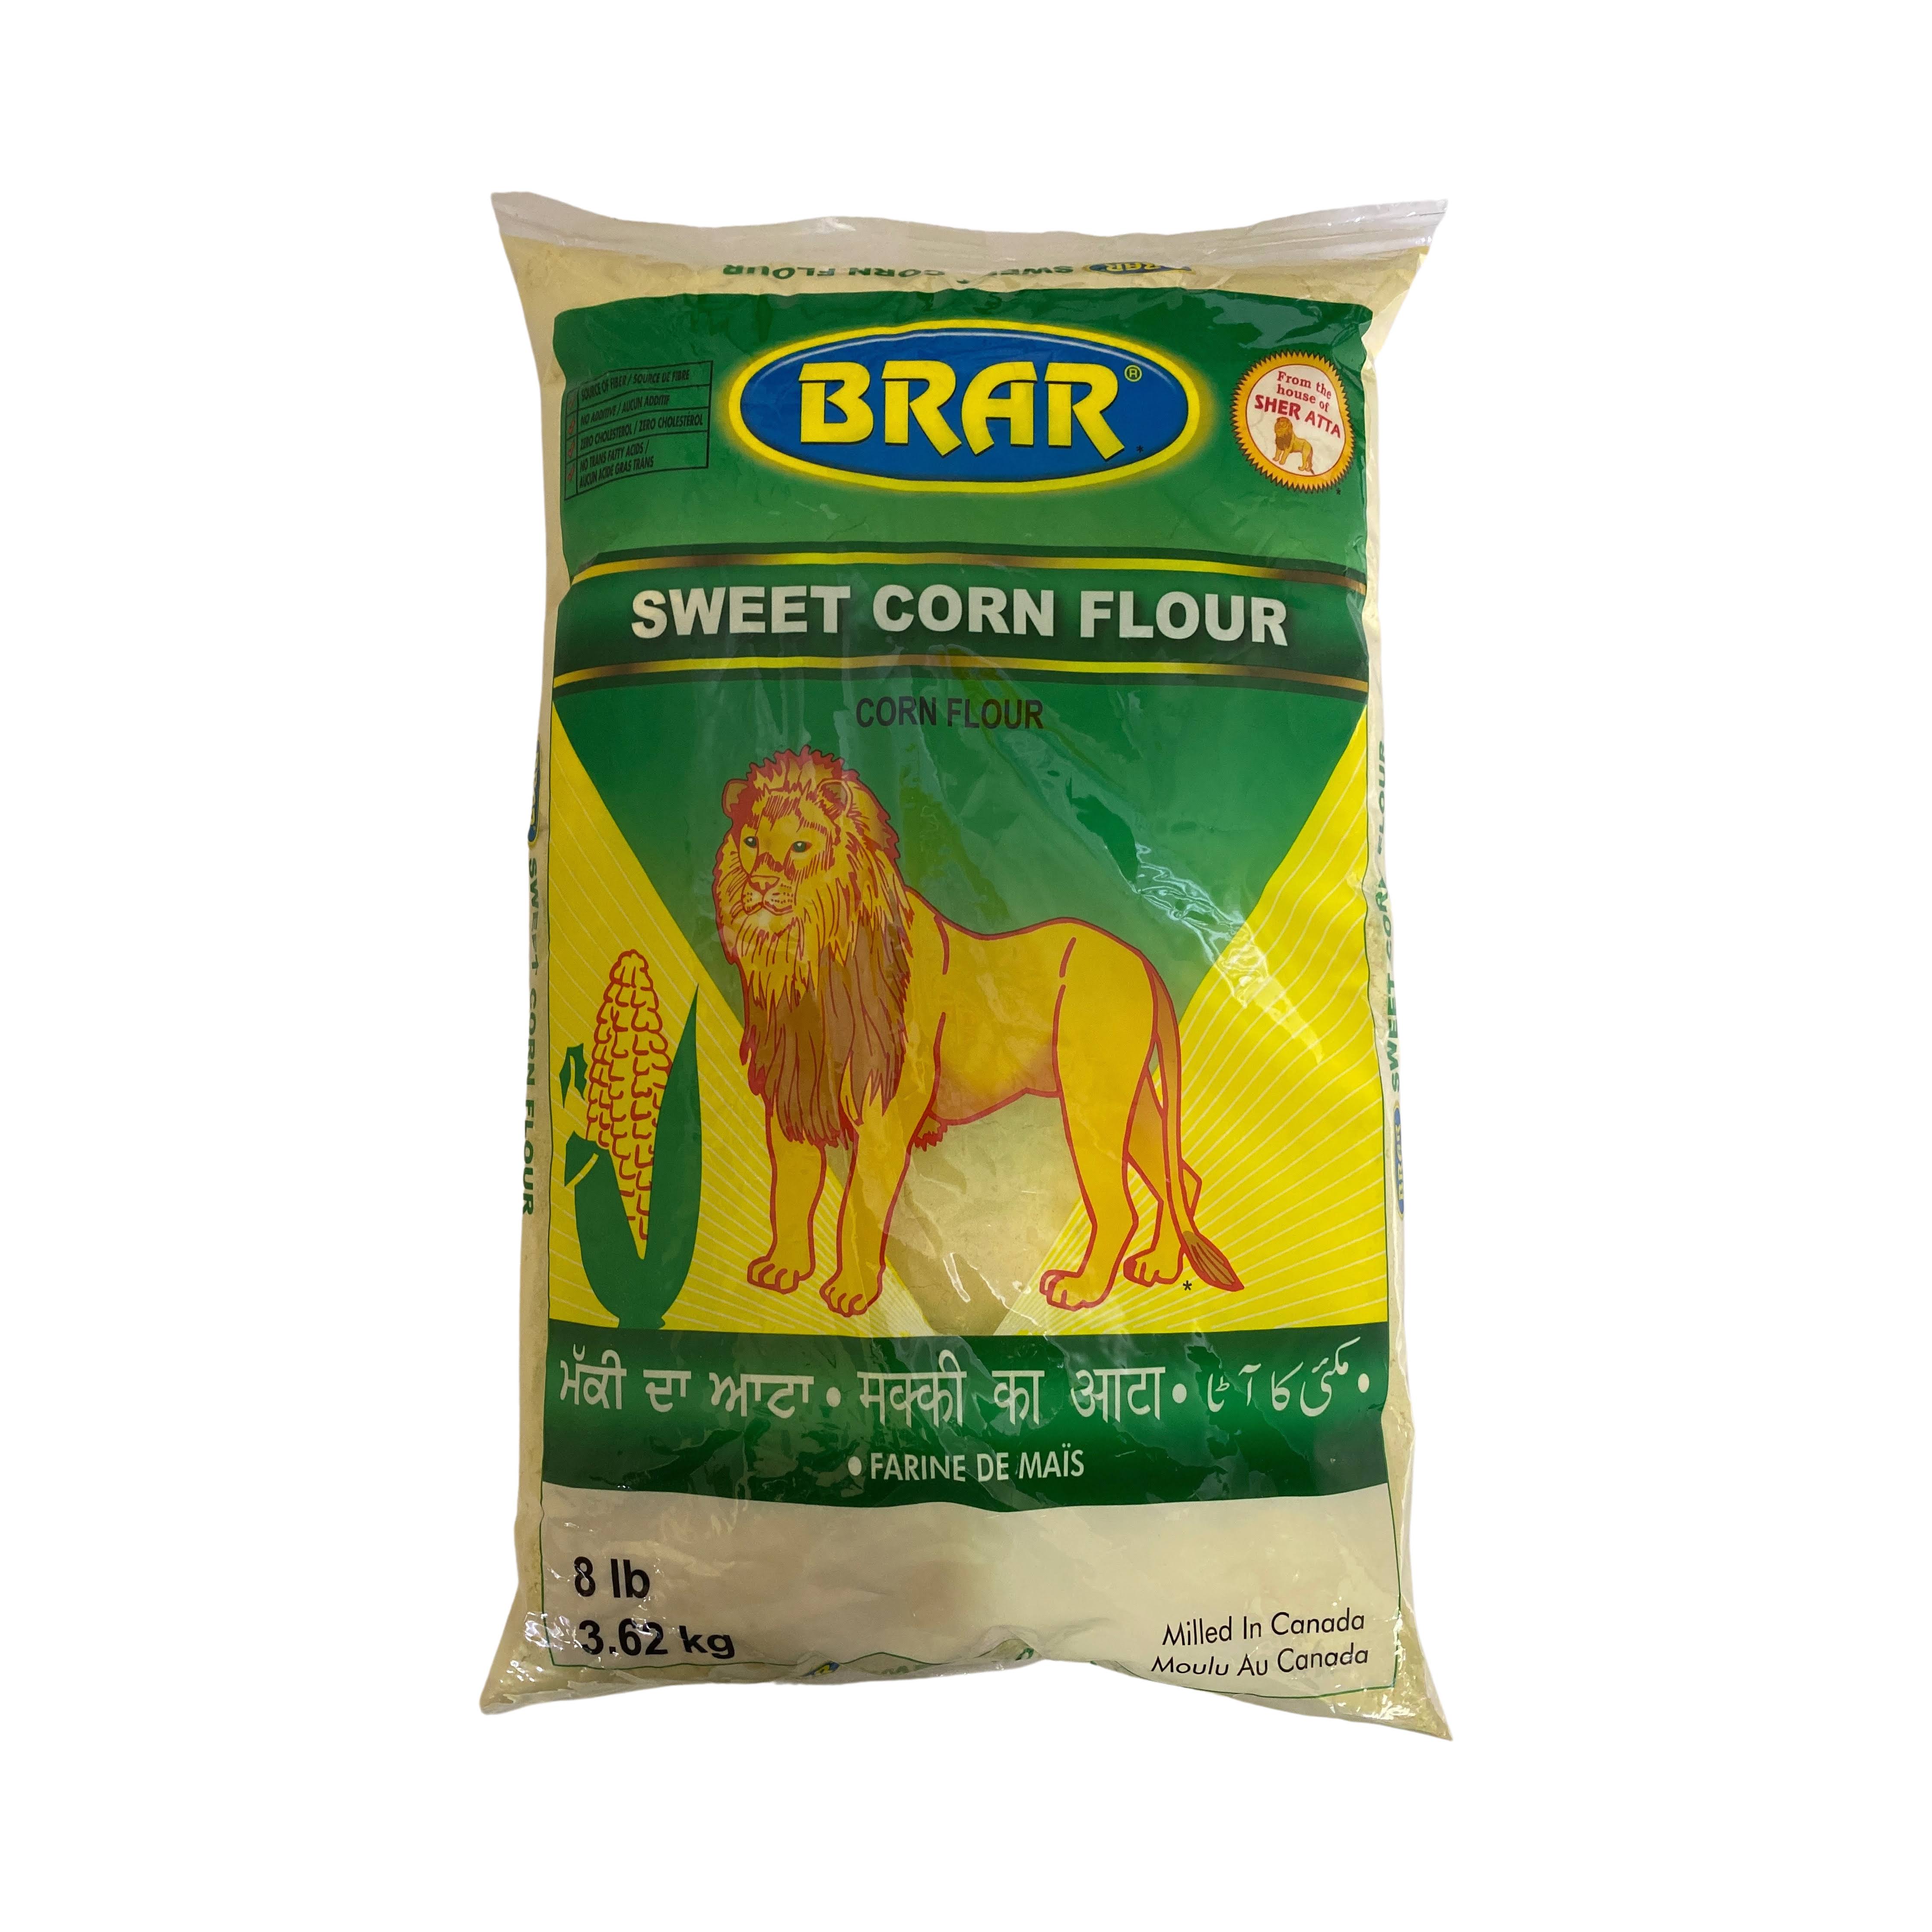 Sher Brar Sweet Corn Flour - 4lbs